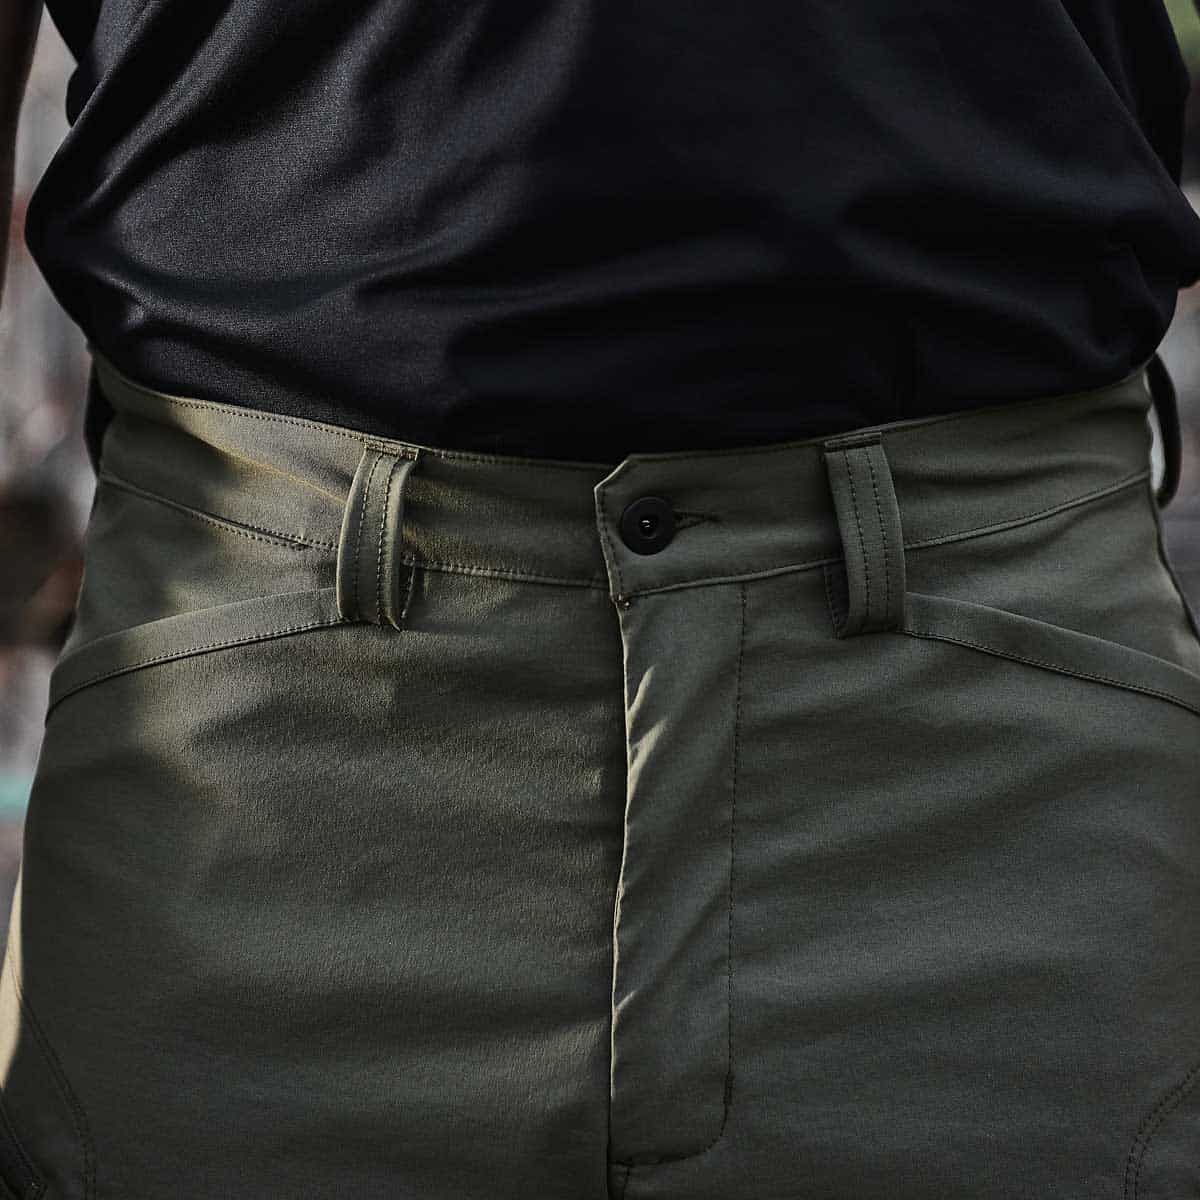 GORUCK Simple Cargo Pants belt loops